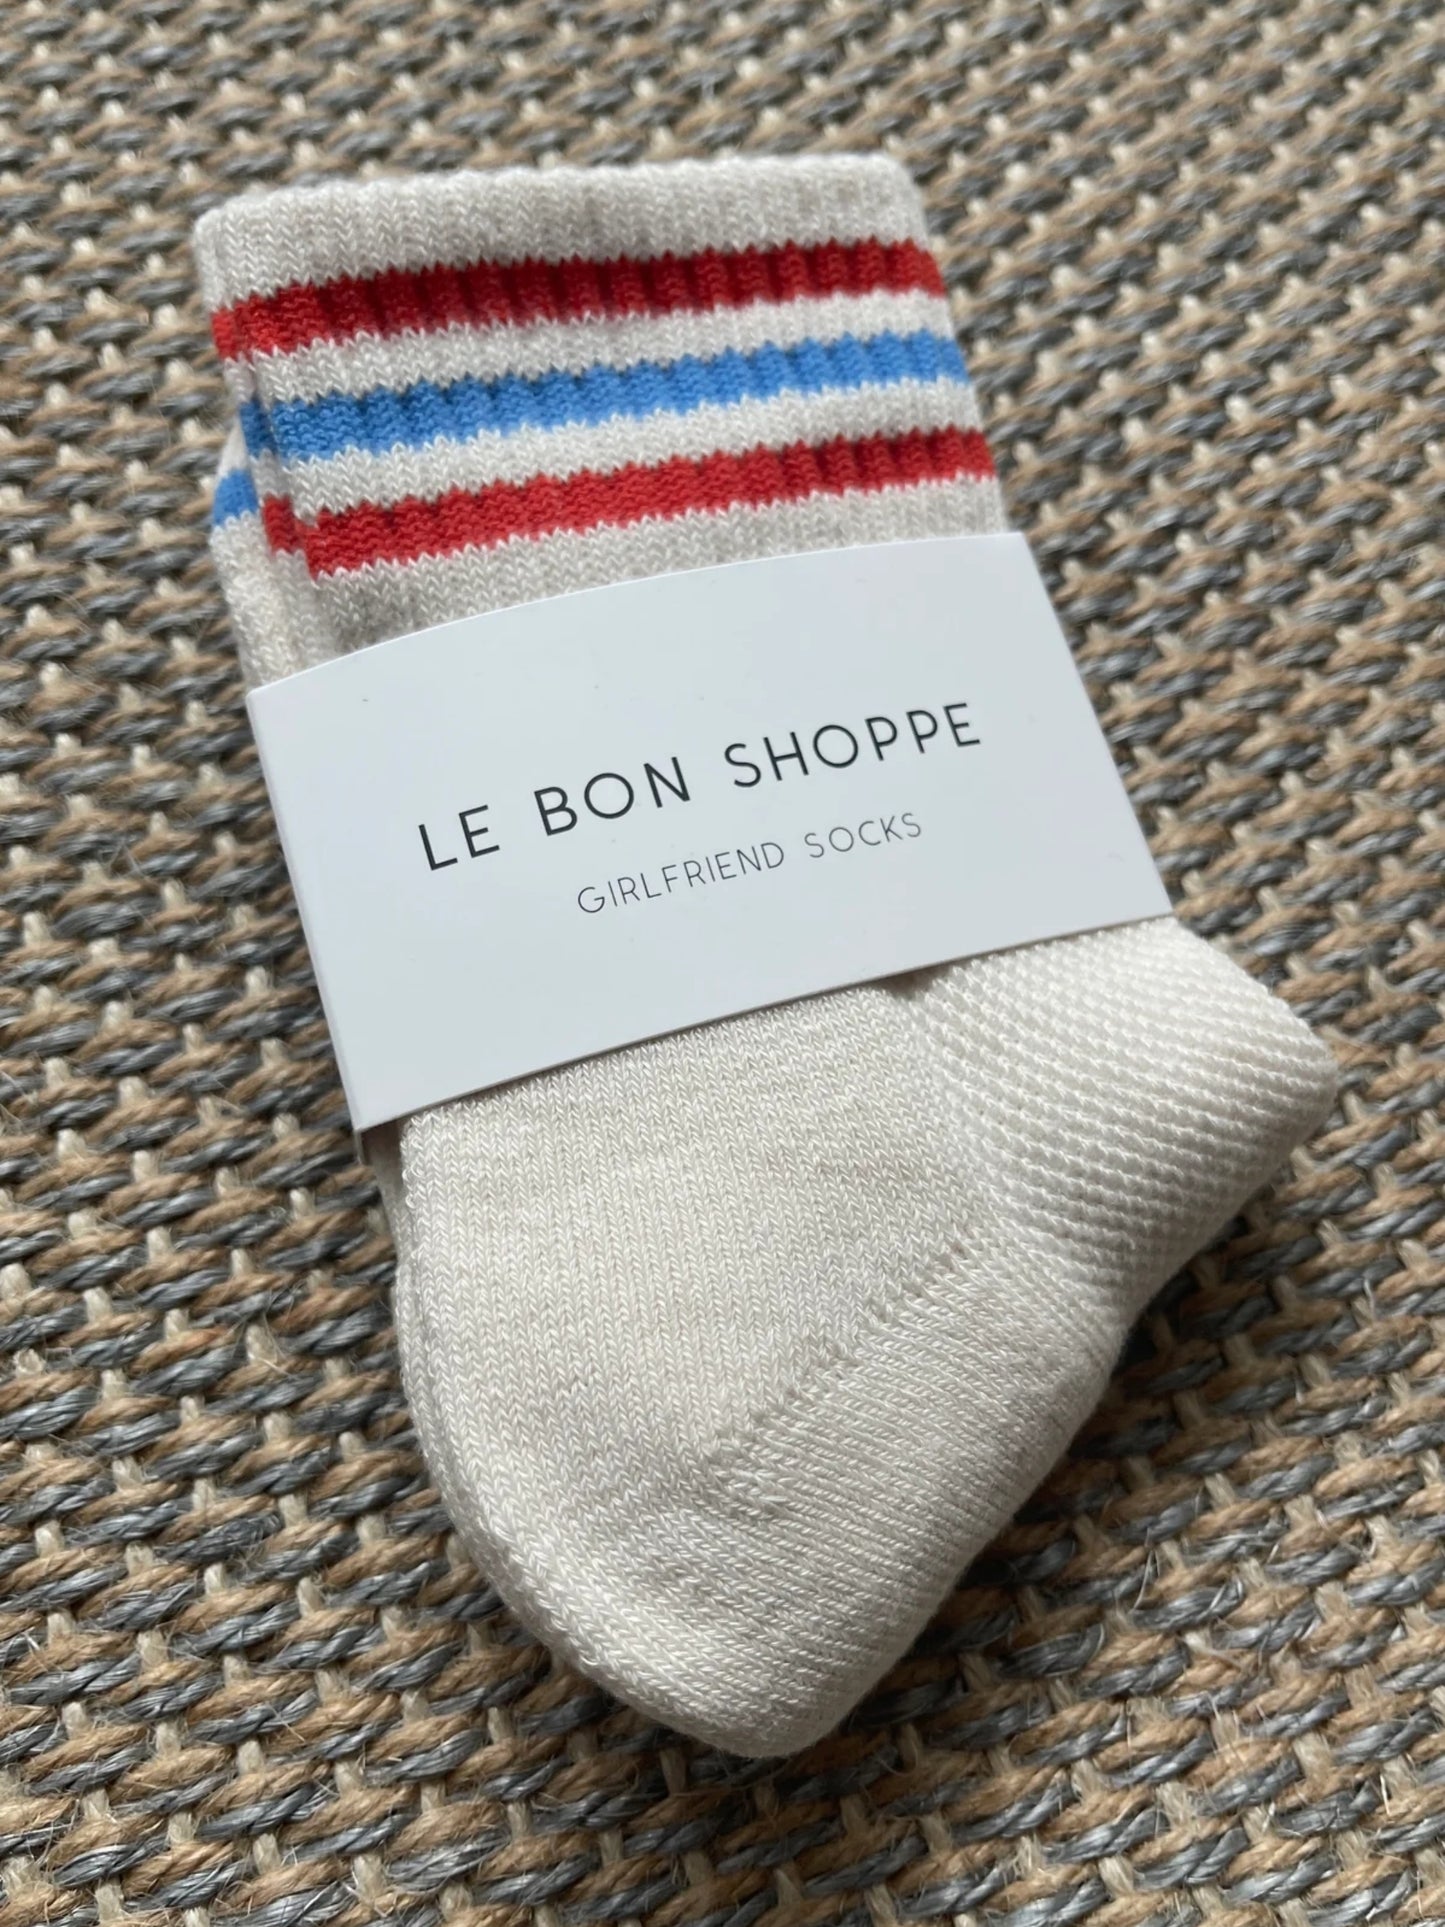 Le Bon Shoppe Girlfriend Socks / Leche